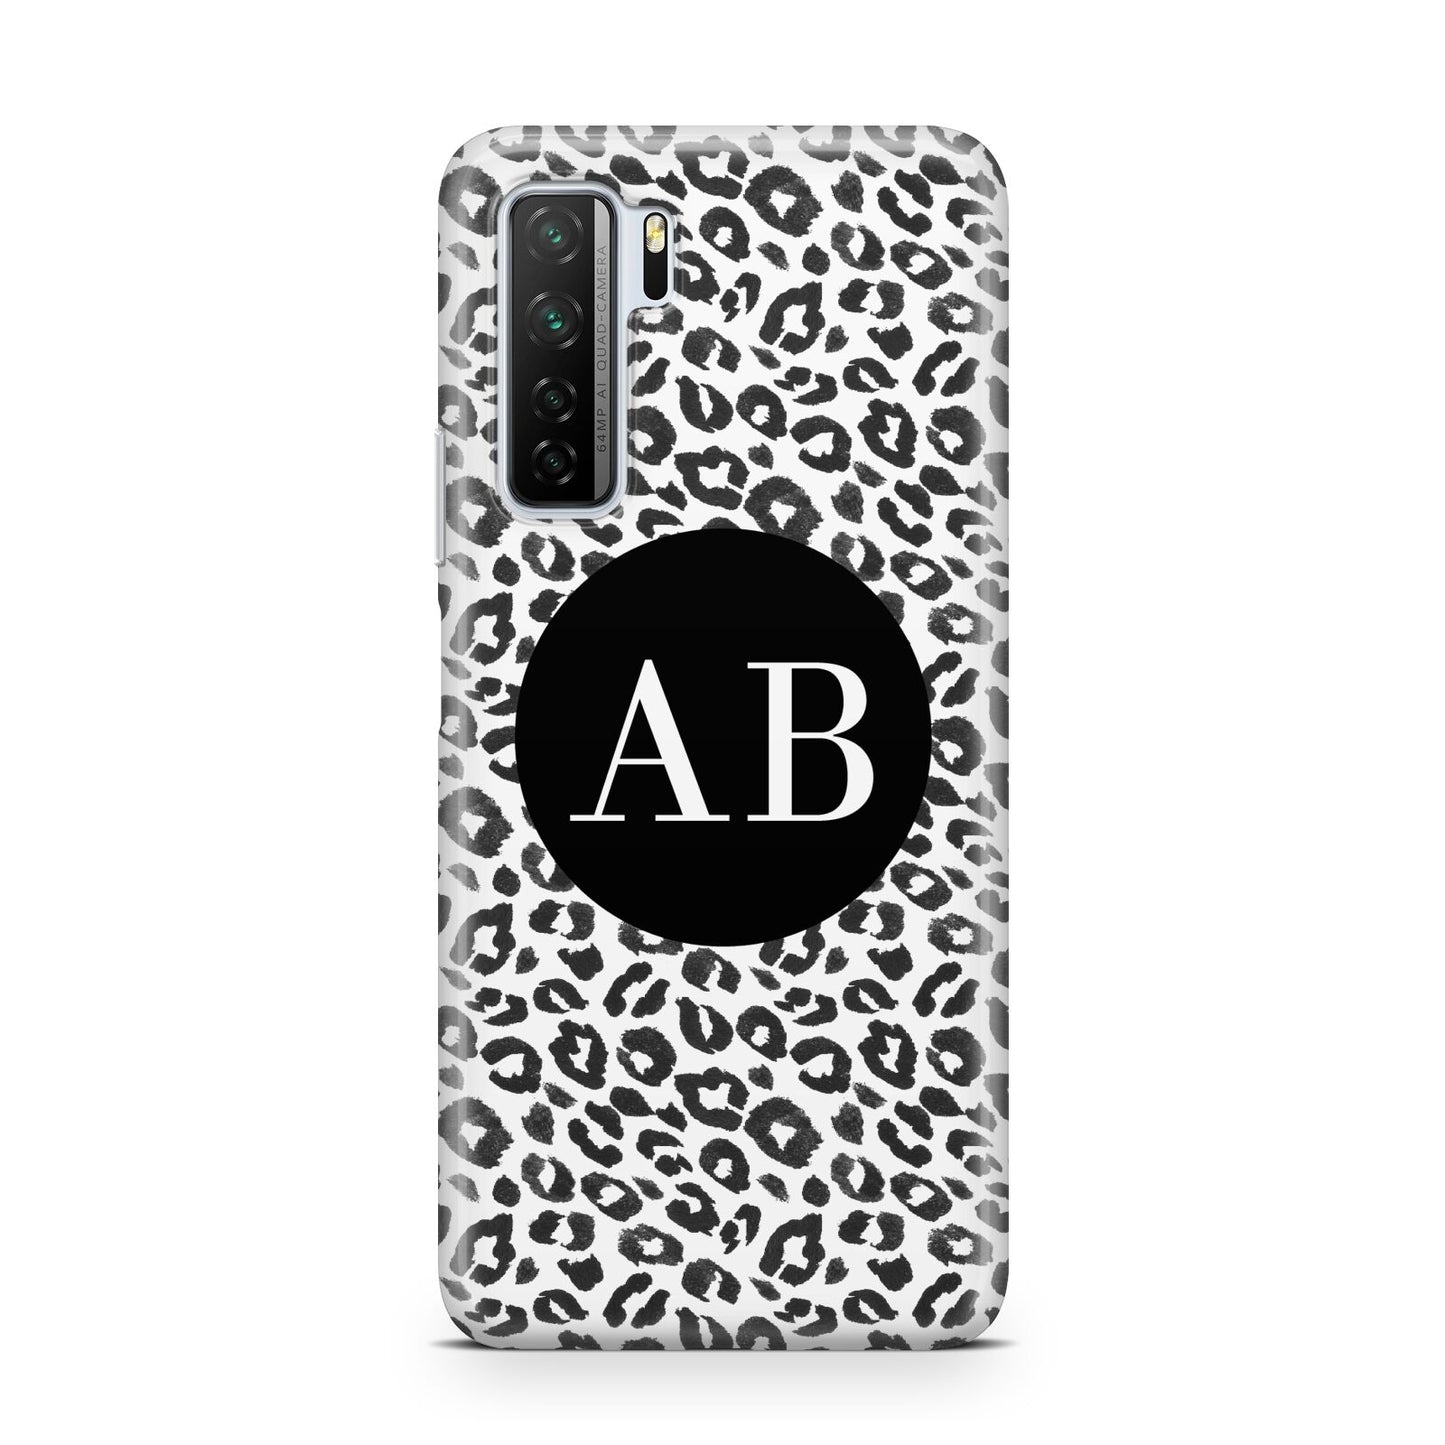 Leopard Print Black and White Huawei P40 Lite 5G Phone Case